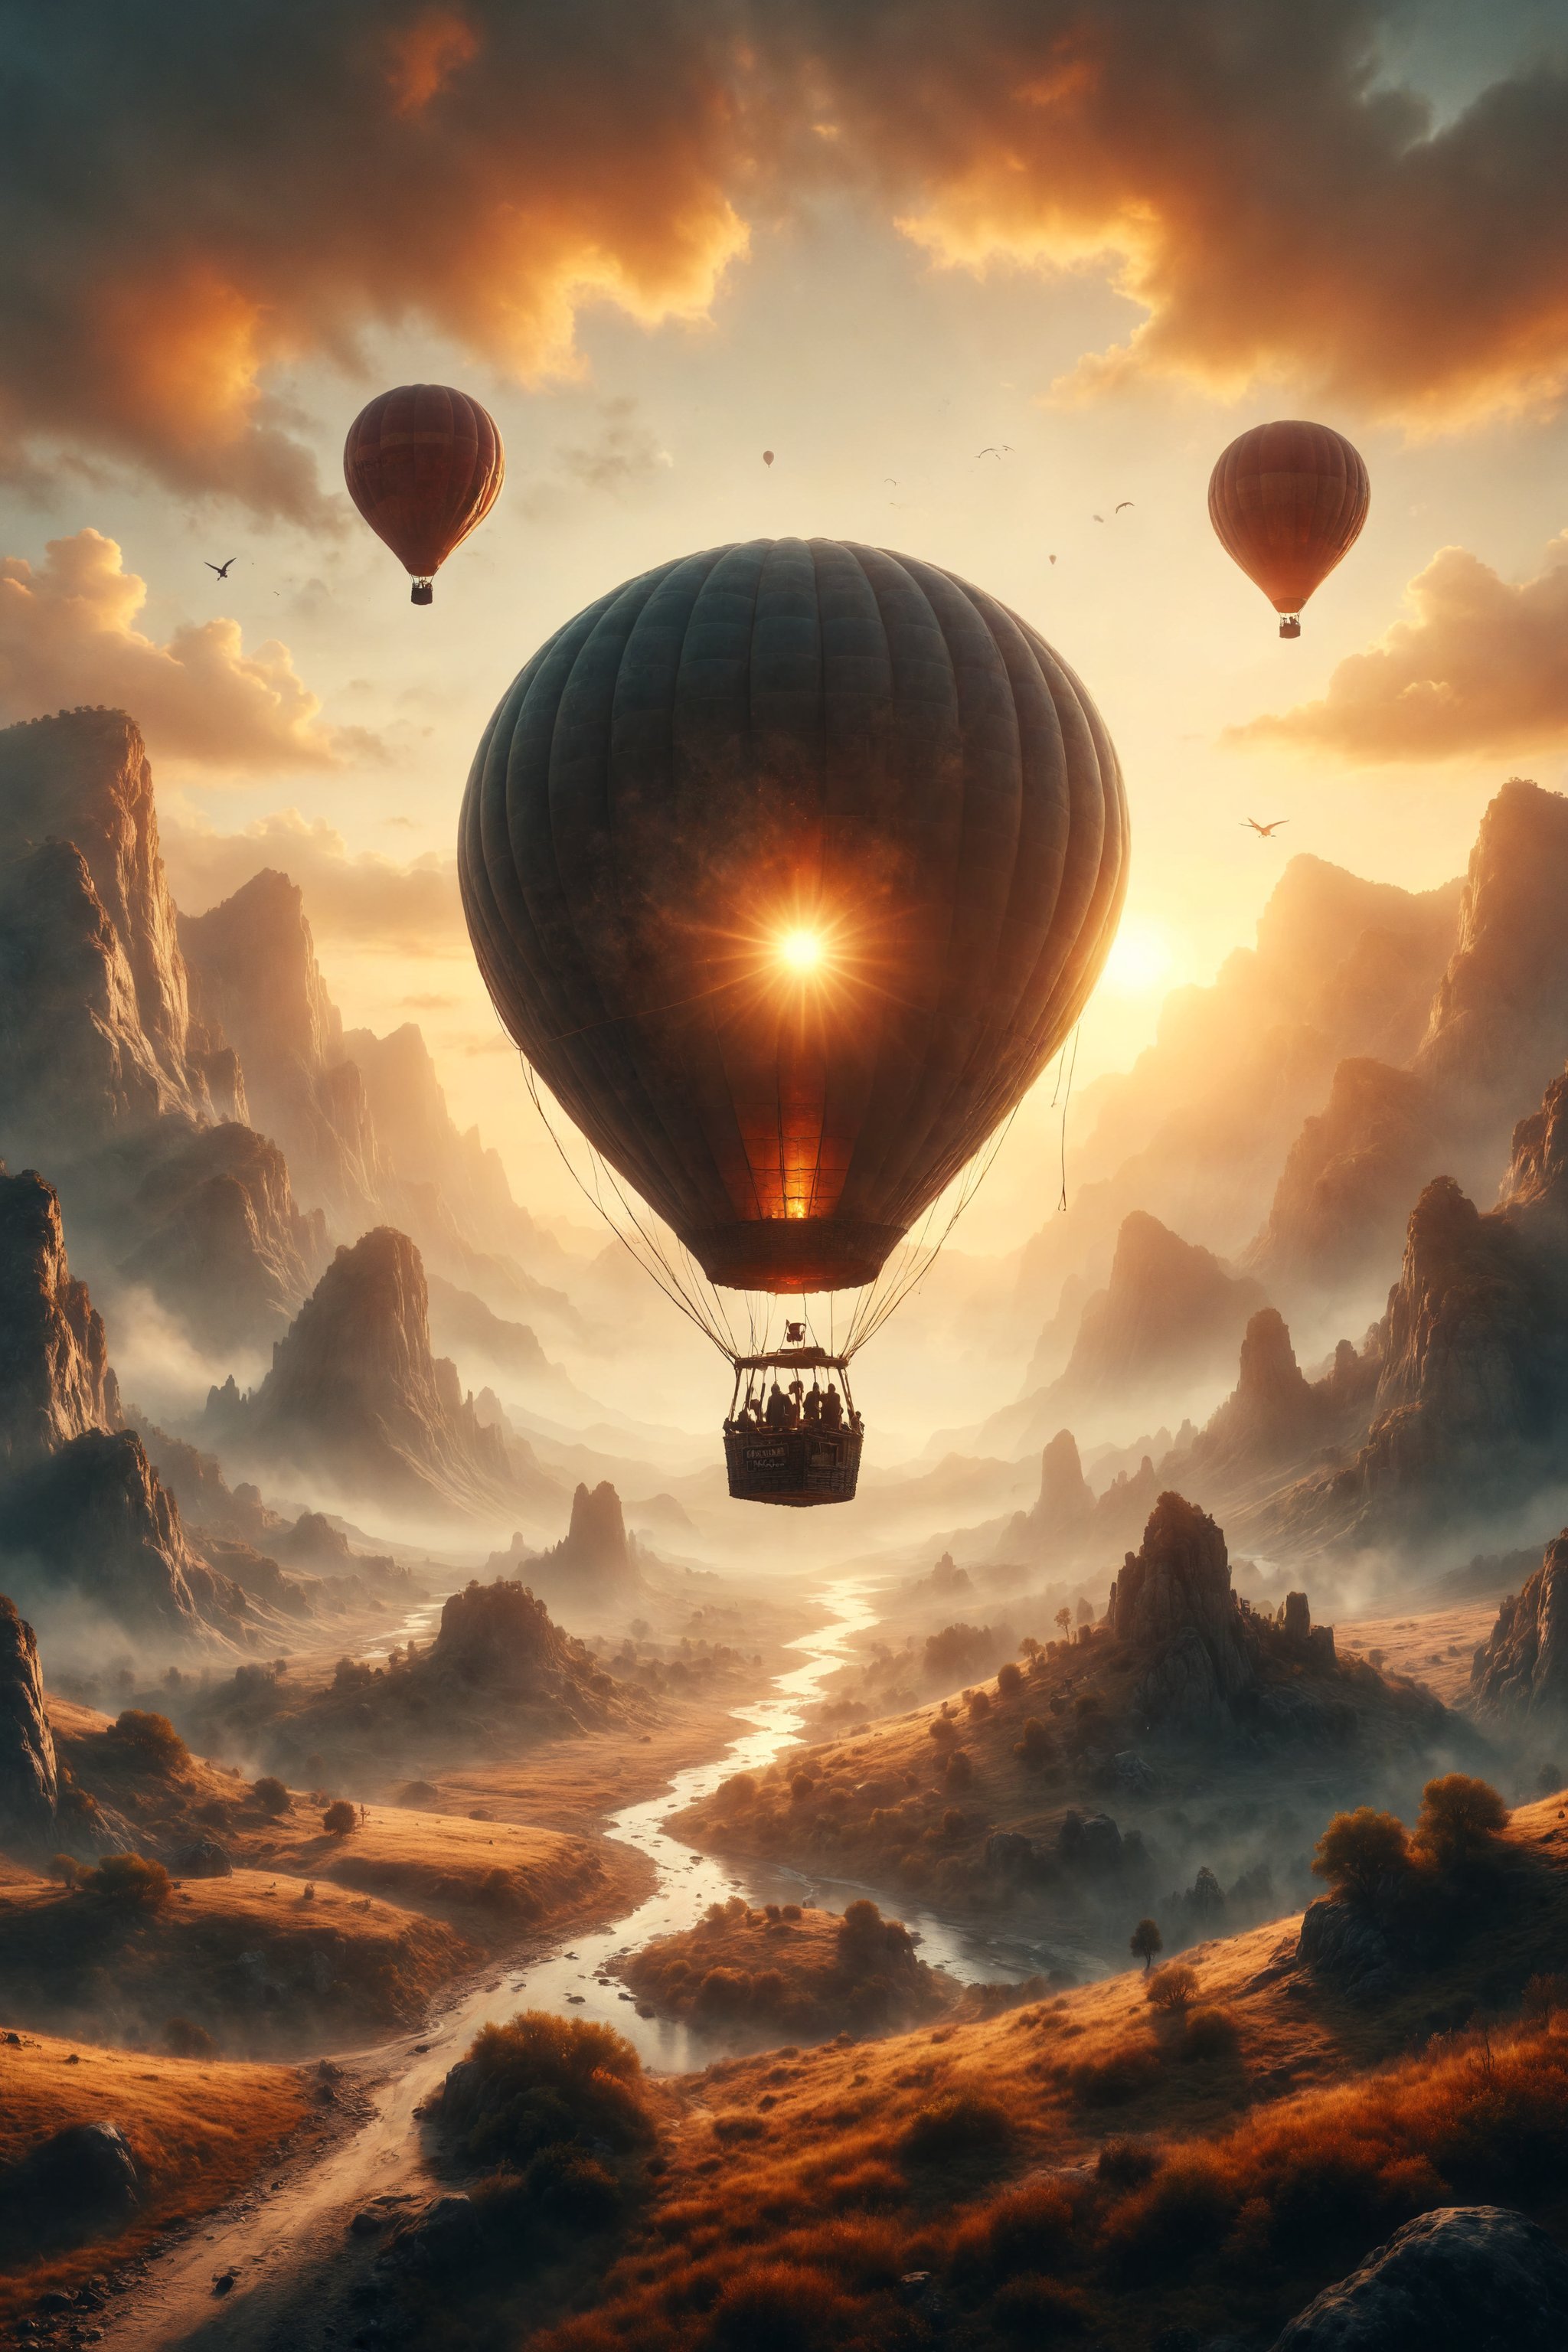 Design a scene where a person flies over a mountainous valley in a hot air balloon, with the rising sun illuminating the horizon.